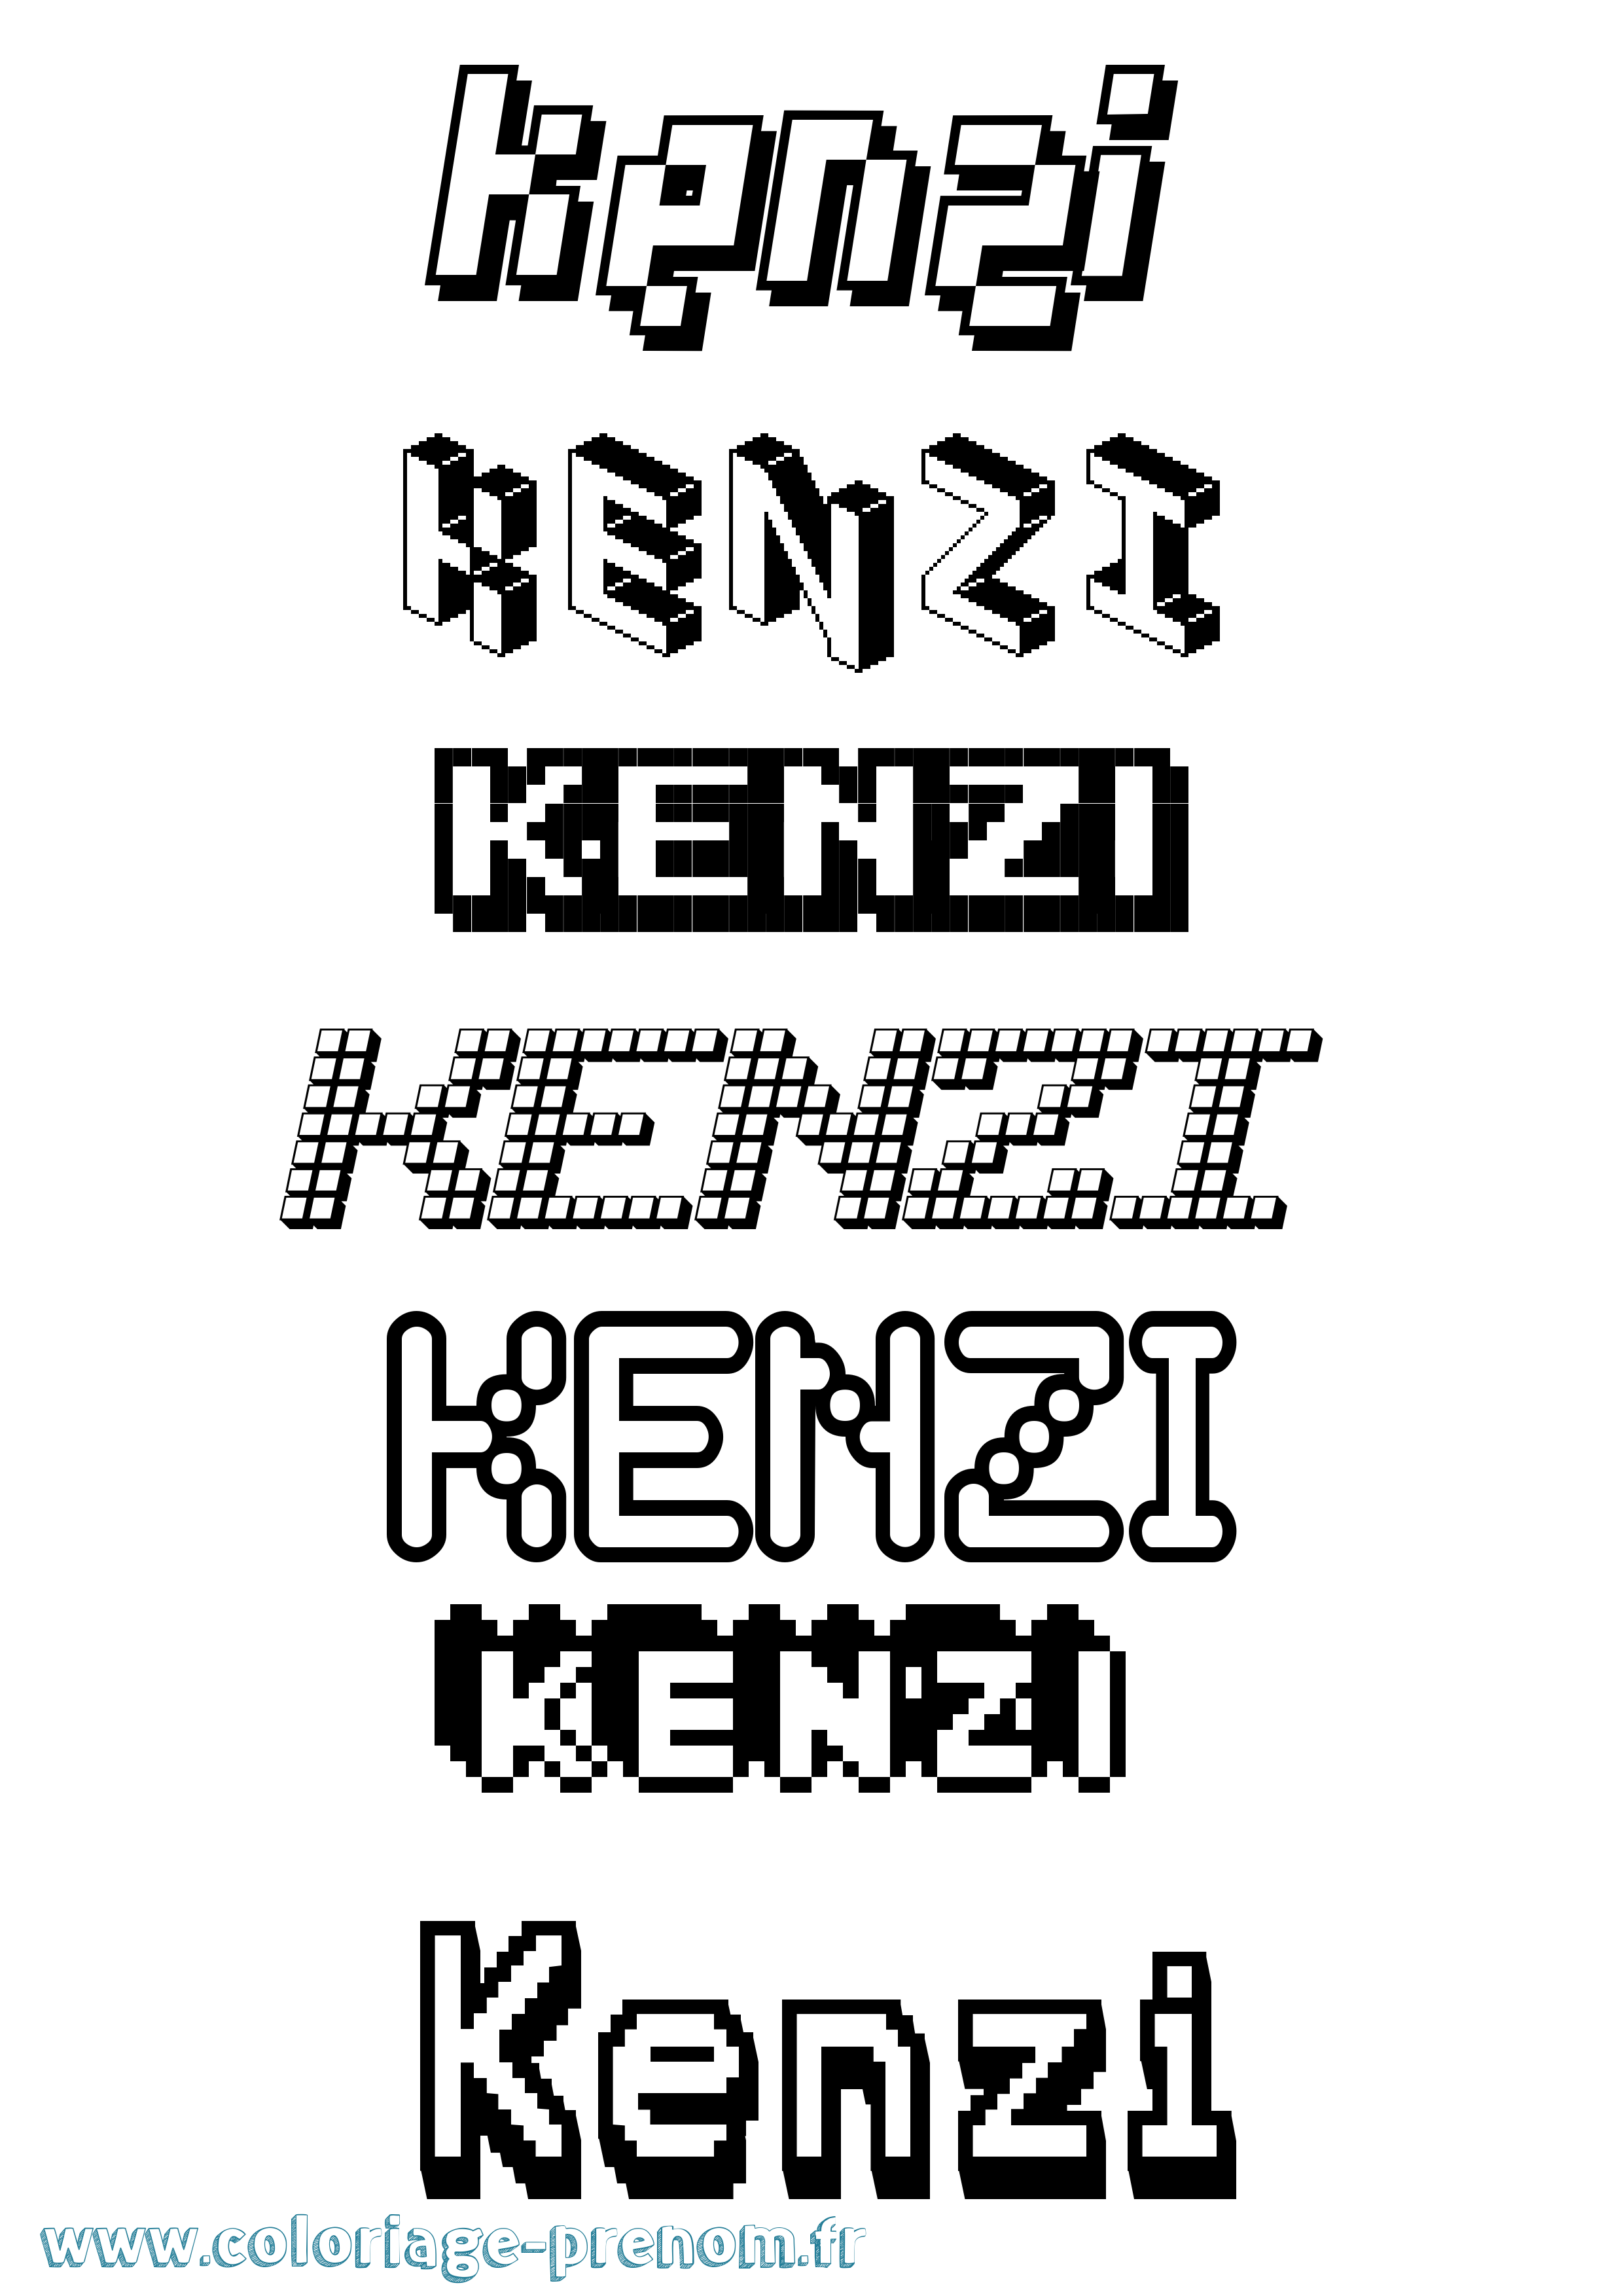 Coloriage prénom Kenzi Pixel